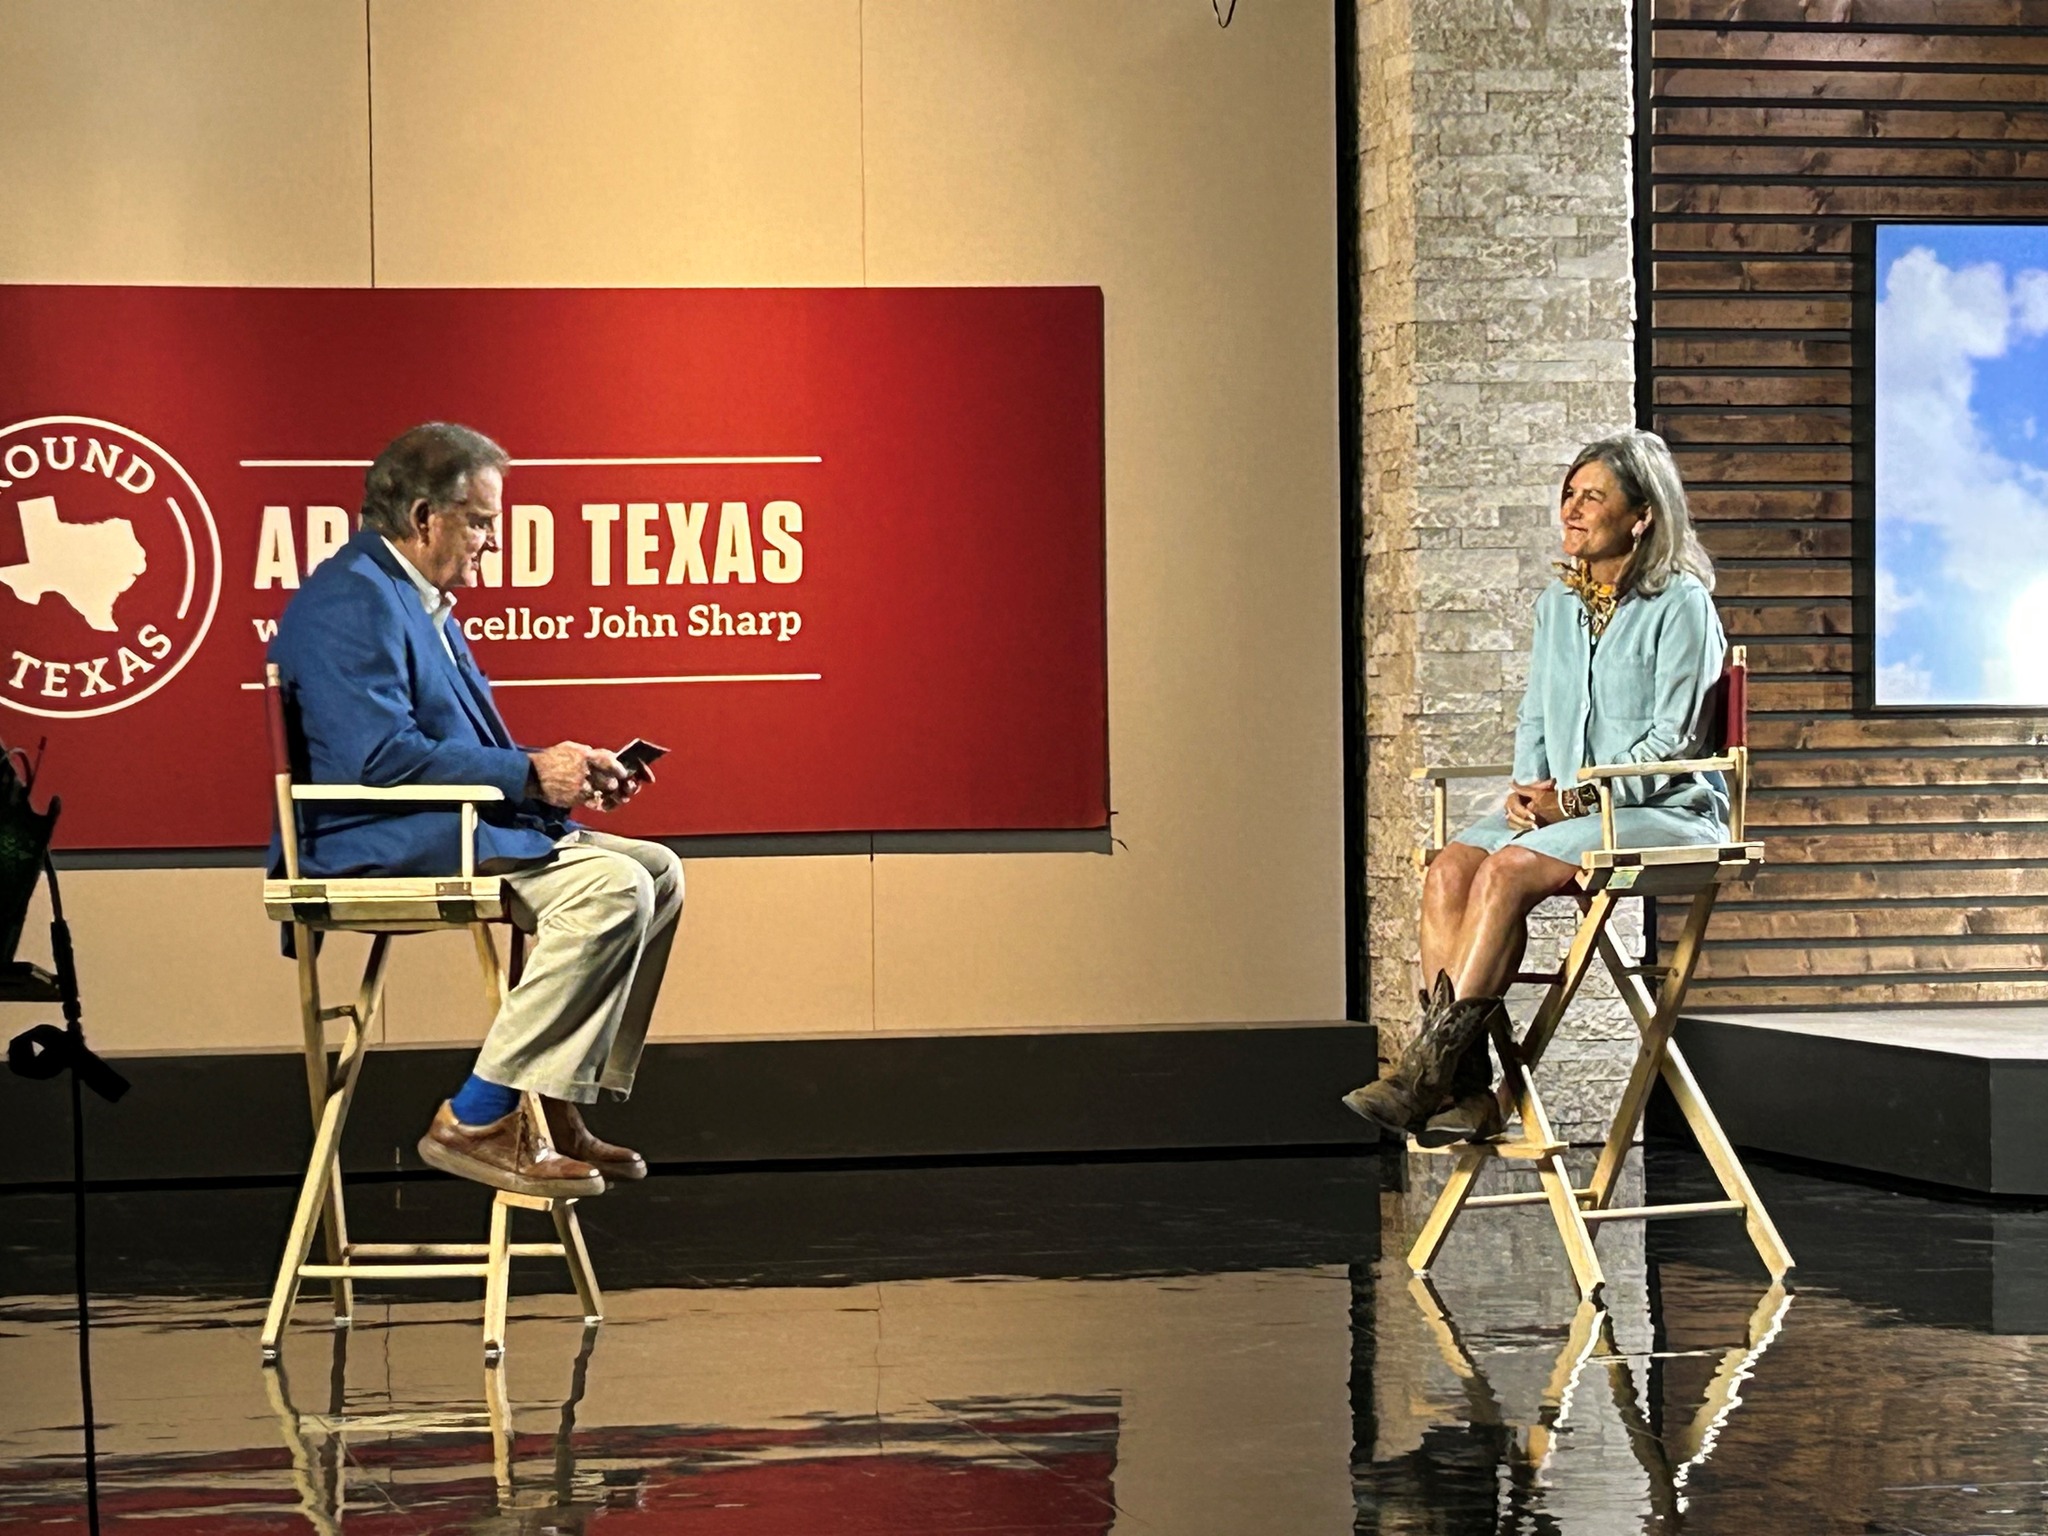 “Around Texas with Chancellor John Sharp” Interview